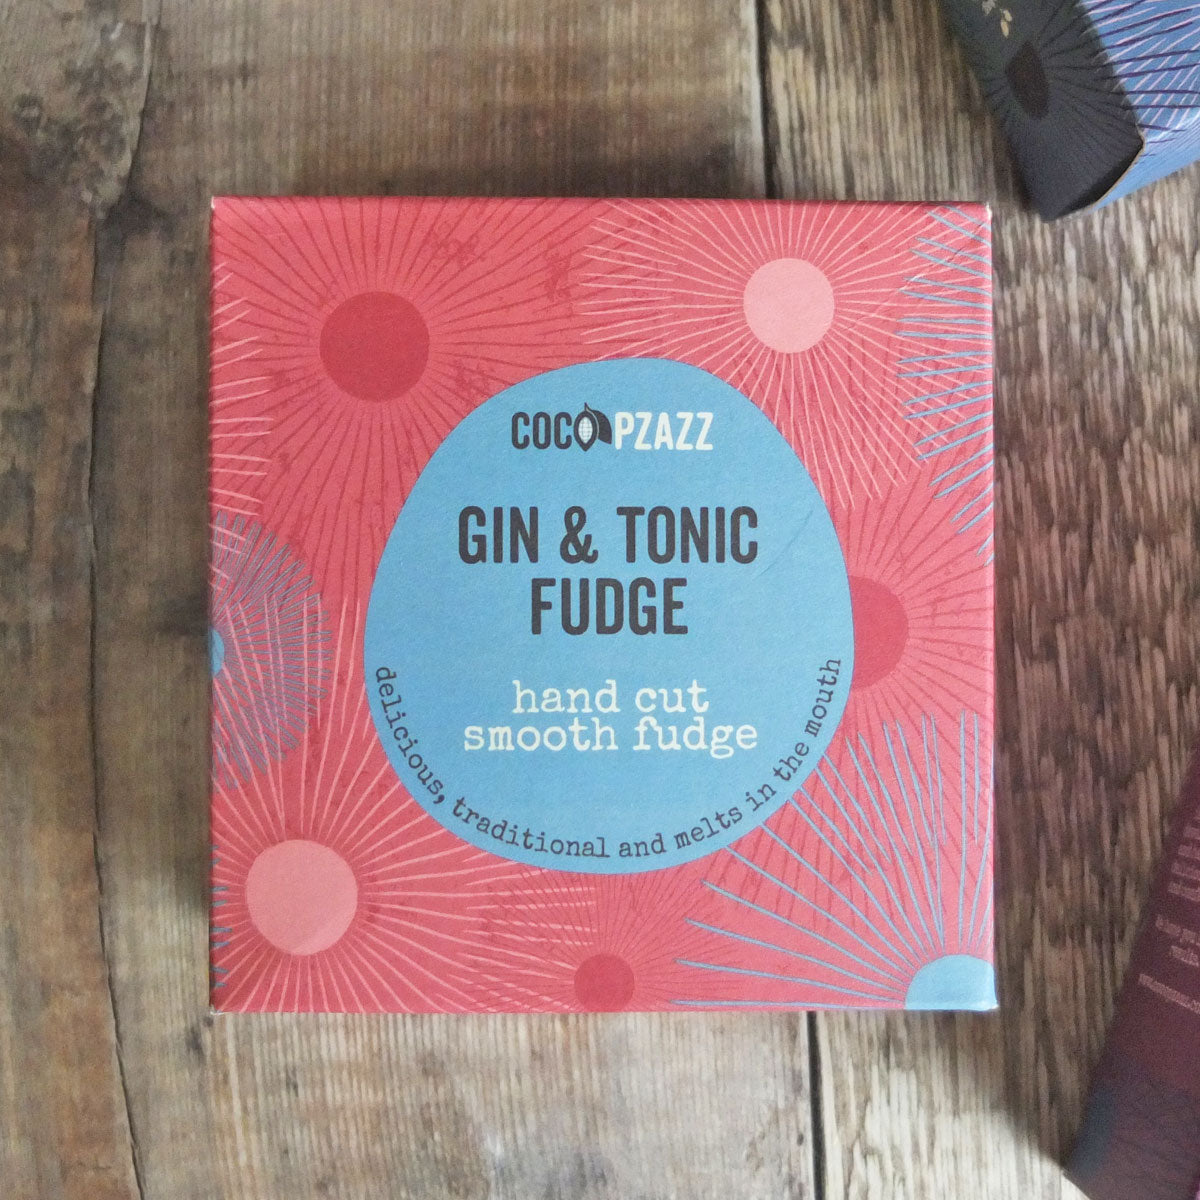 Gin & Tonic Fudge Box by Coco Pzazz